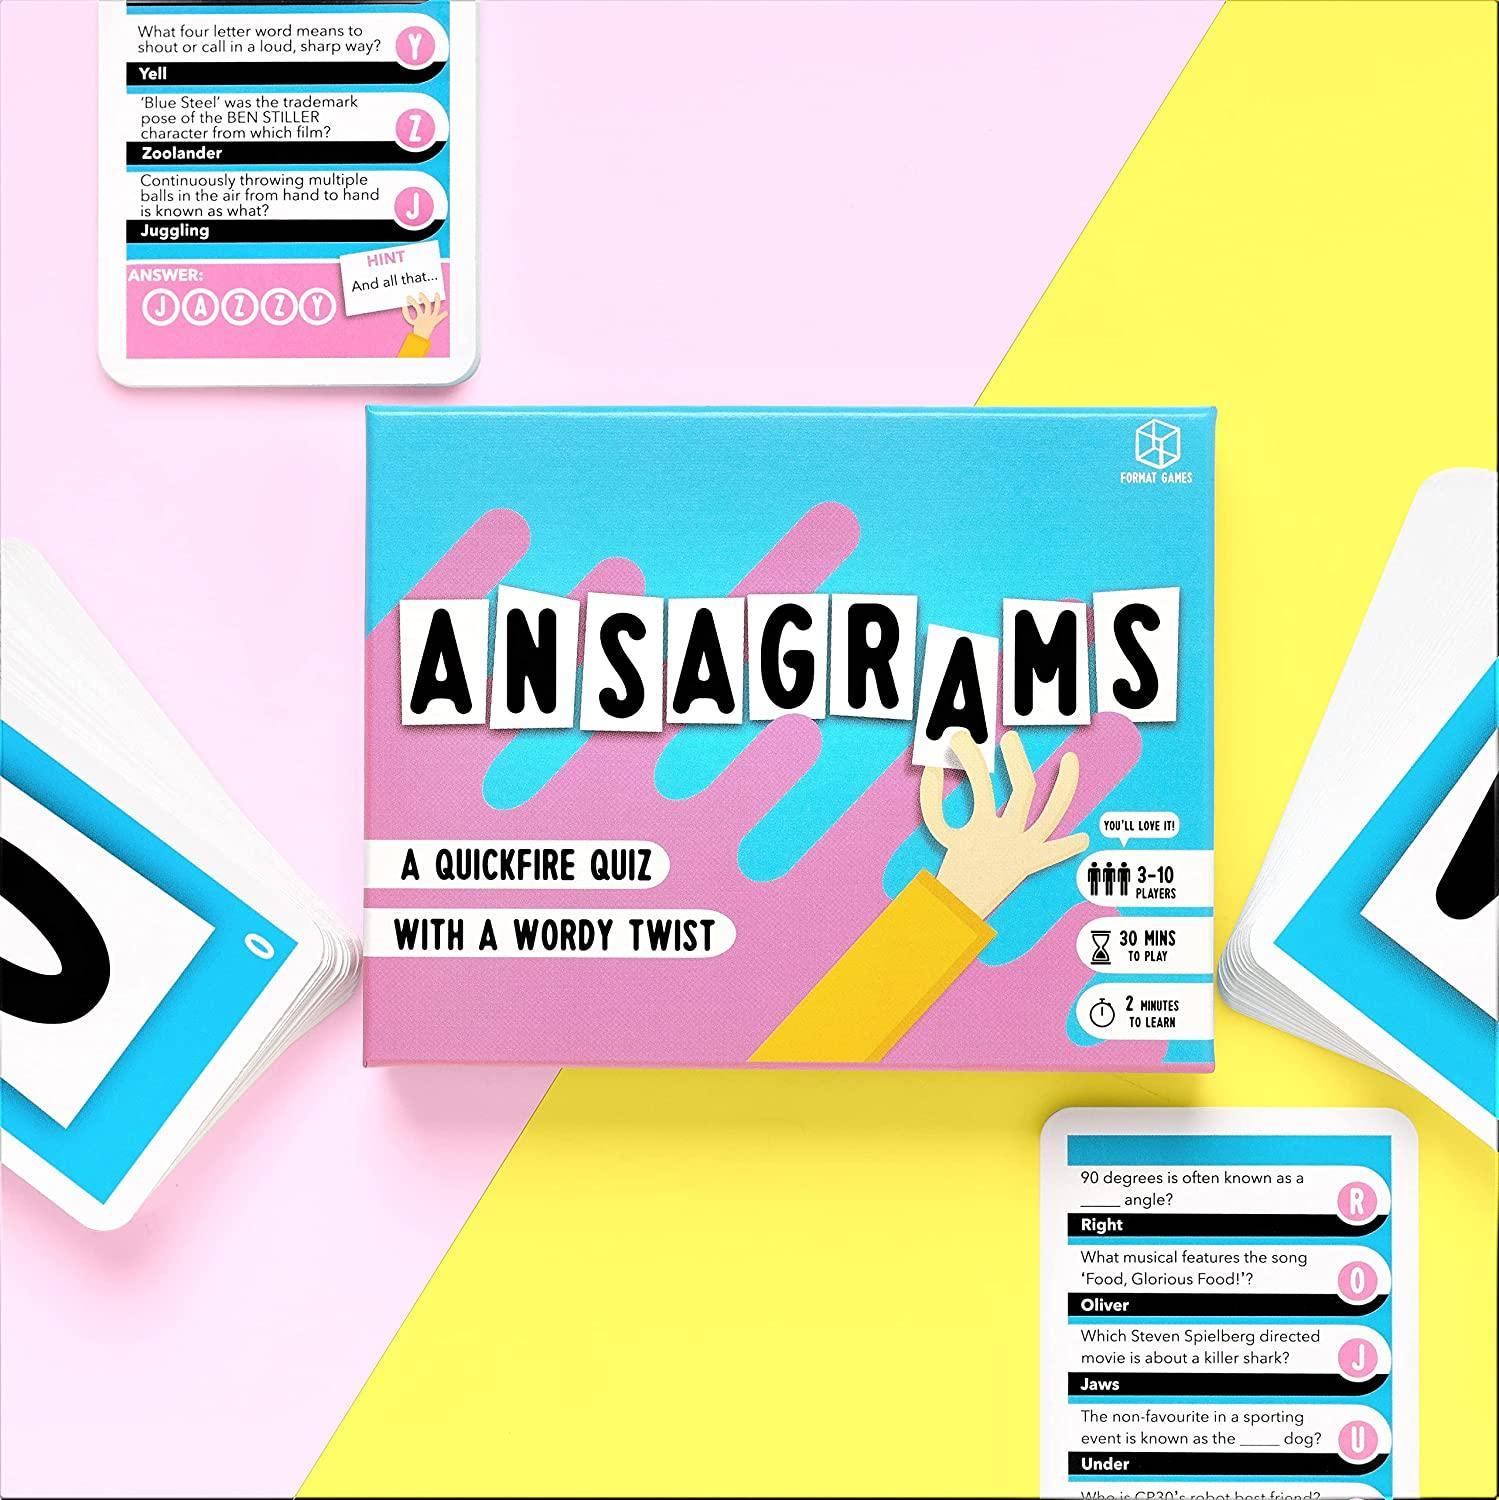 Ansagrams (Small Box / Pocket) - The Card Vault